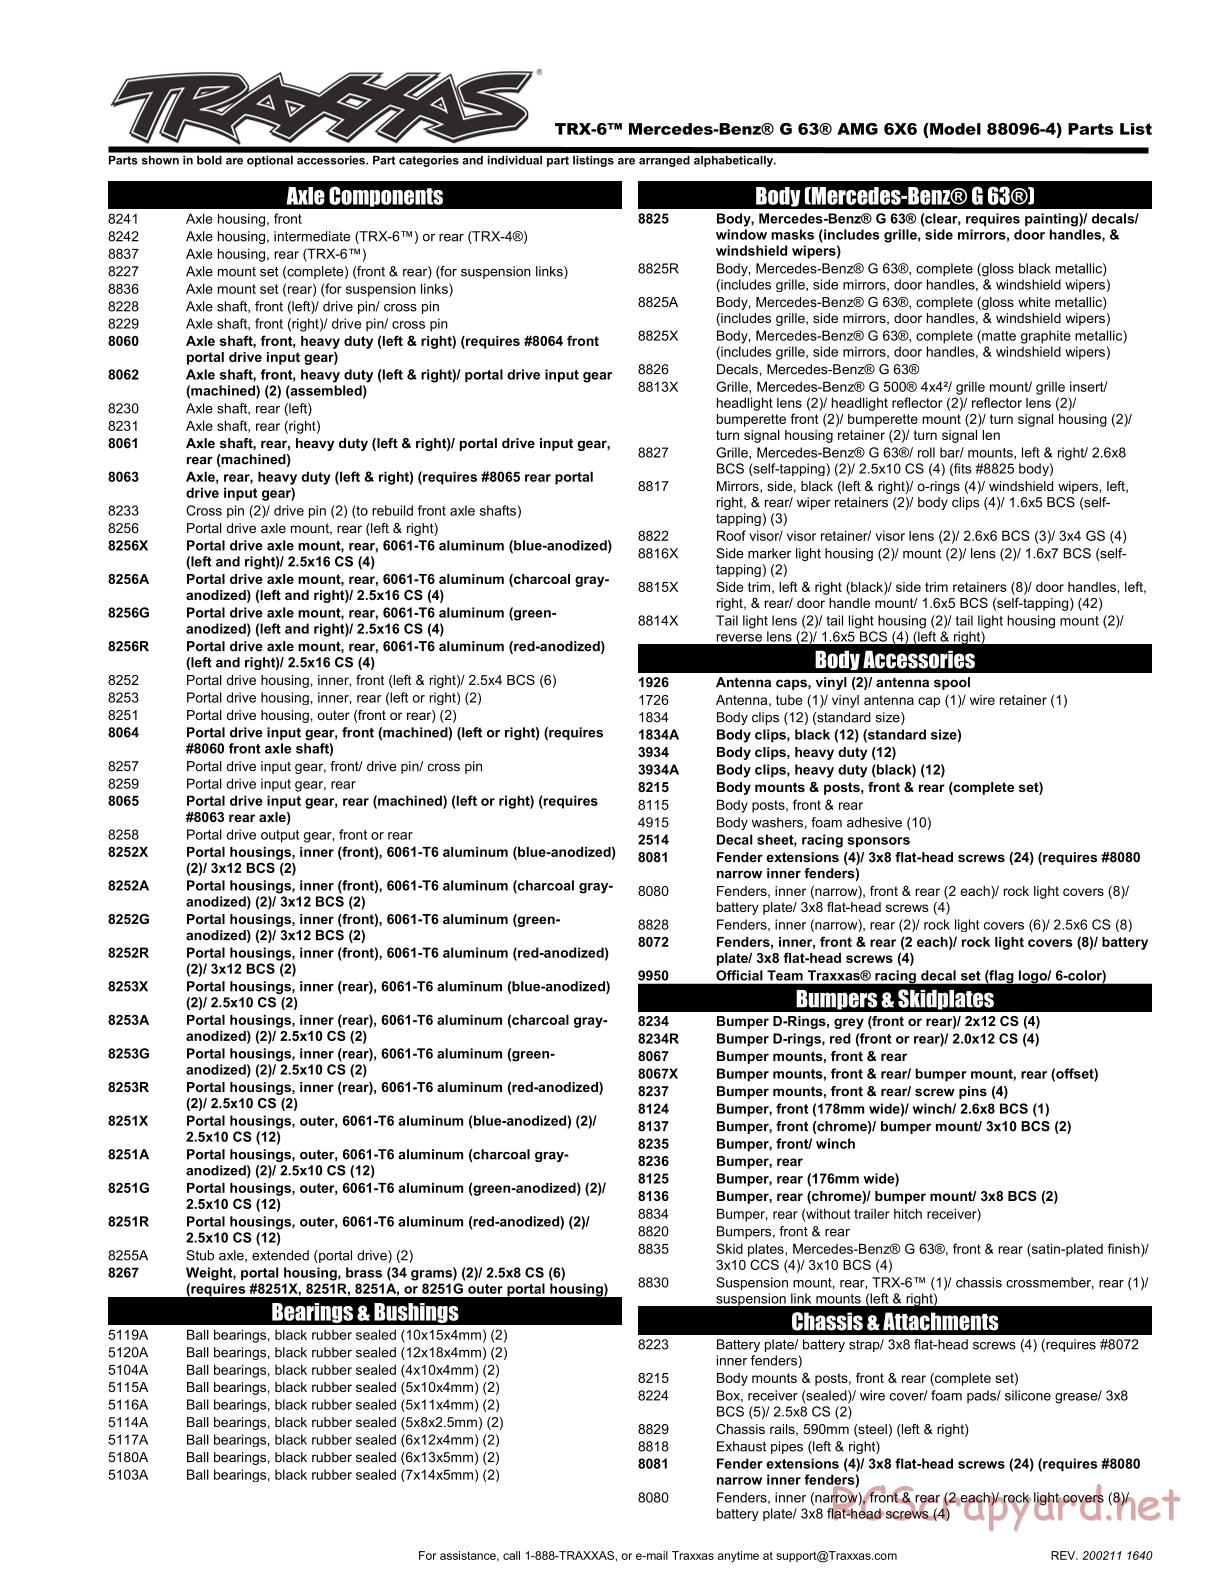 Traxxas - TRX-6 Mercedes-Benz G 63 AMG 6x6 - Parts List - Page 1